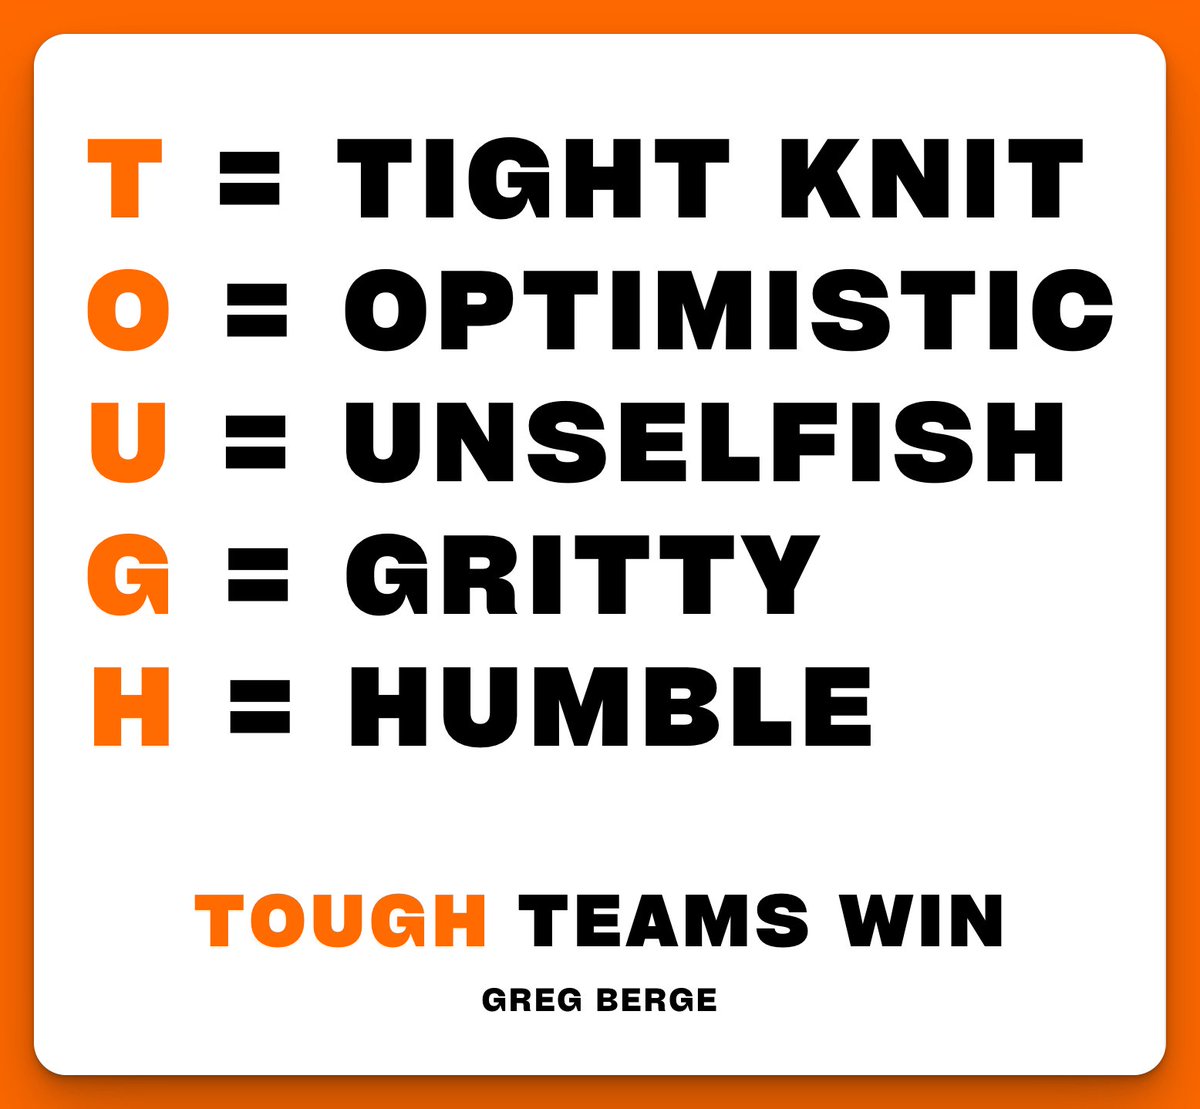 TOUGH Teams WIN! T = Tight Knit O = Optimistic U = Unselfish G = Gritty H = Humble Be TOUGH.